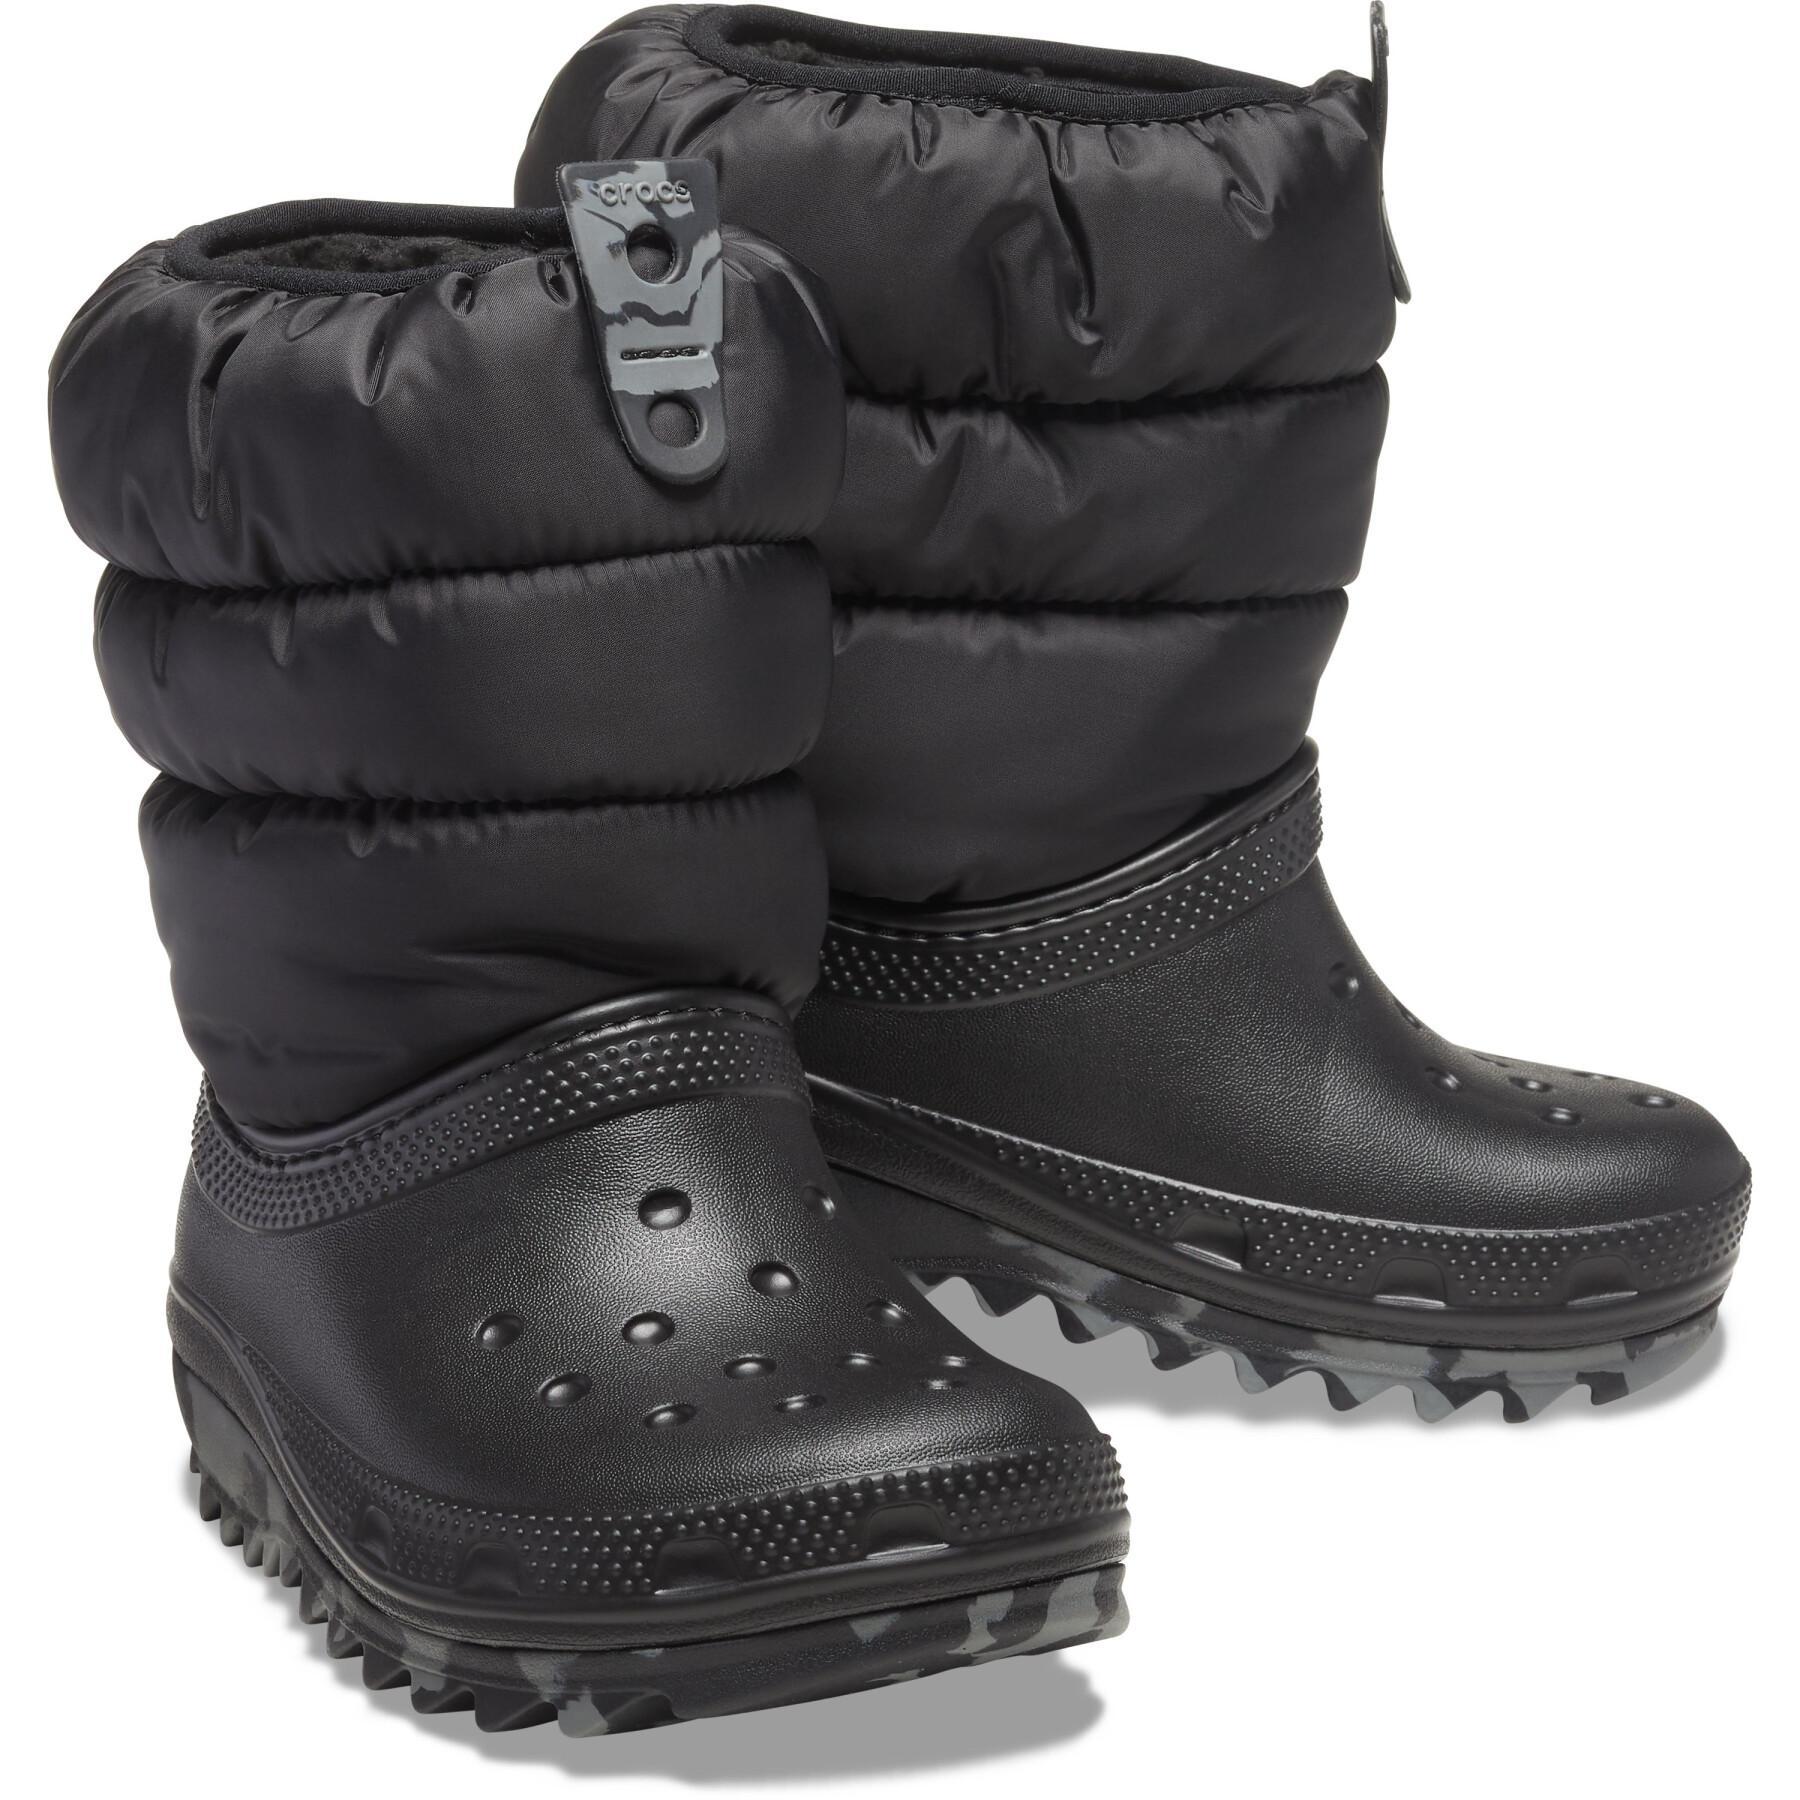 Children's classic boots Crocs neo puff